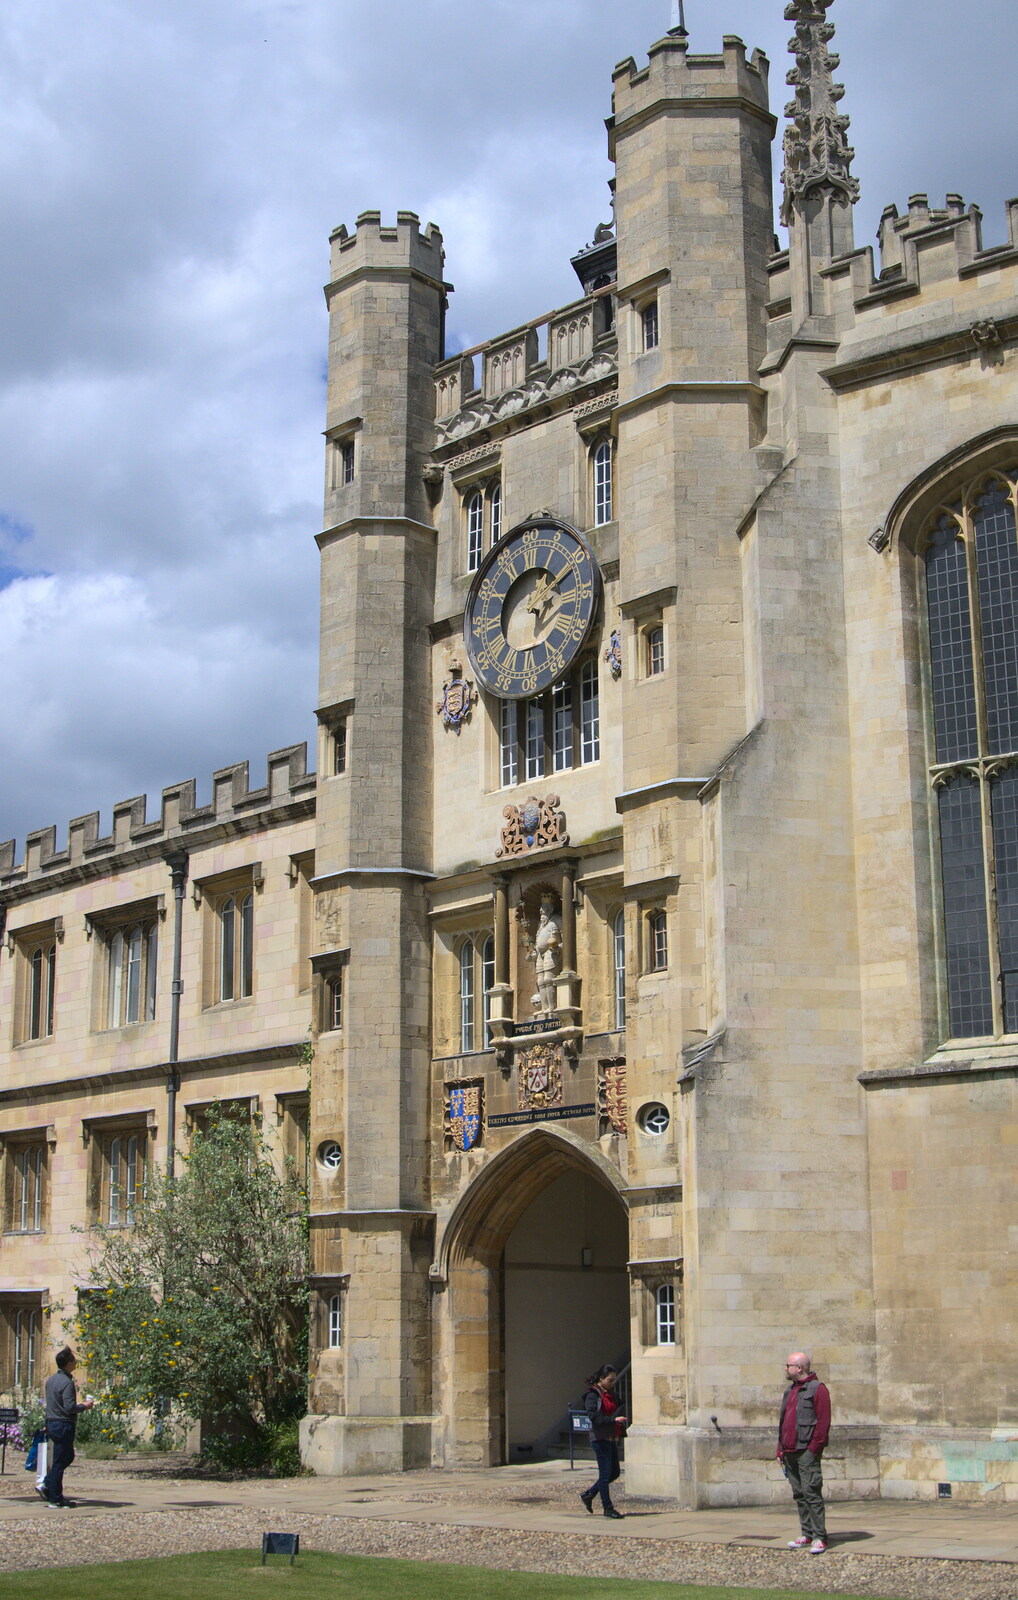 Trinity's clock from Punting With Grandad, Cambridge, Cambridgeshire - 6th June 2015